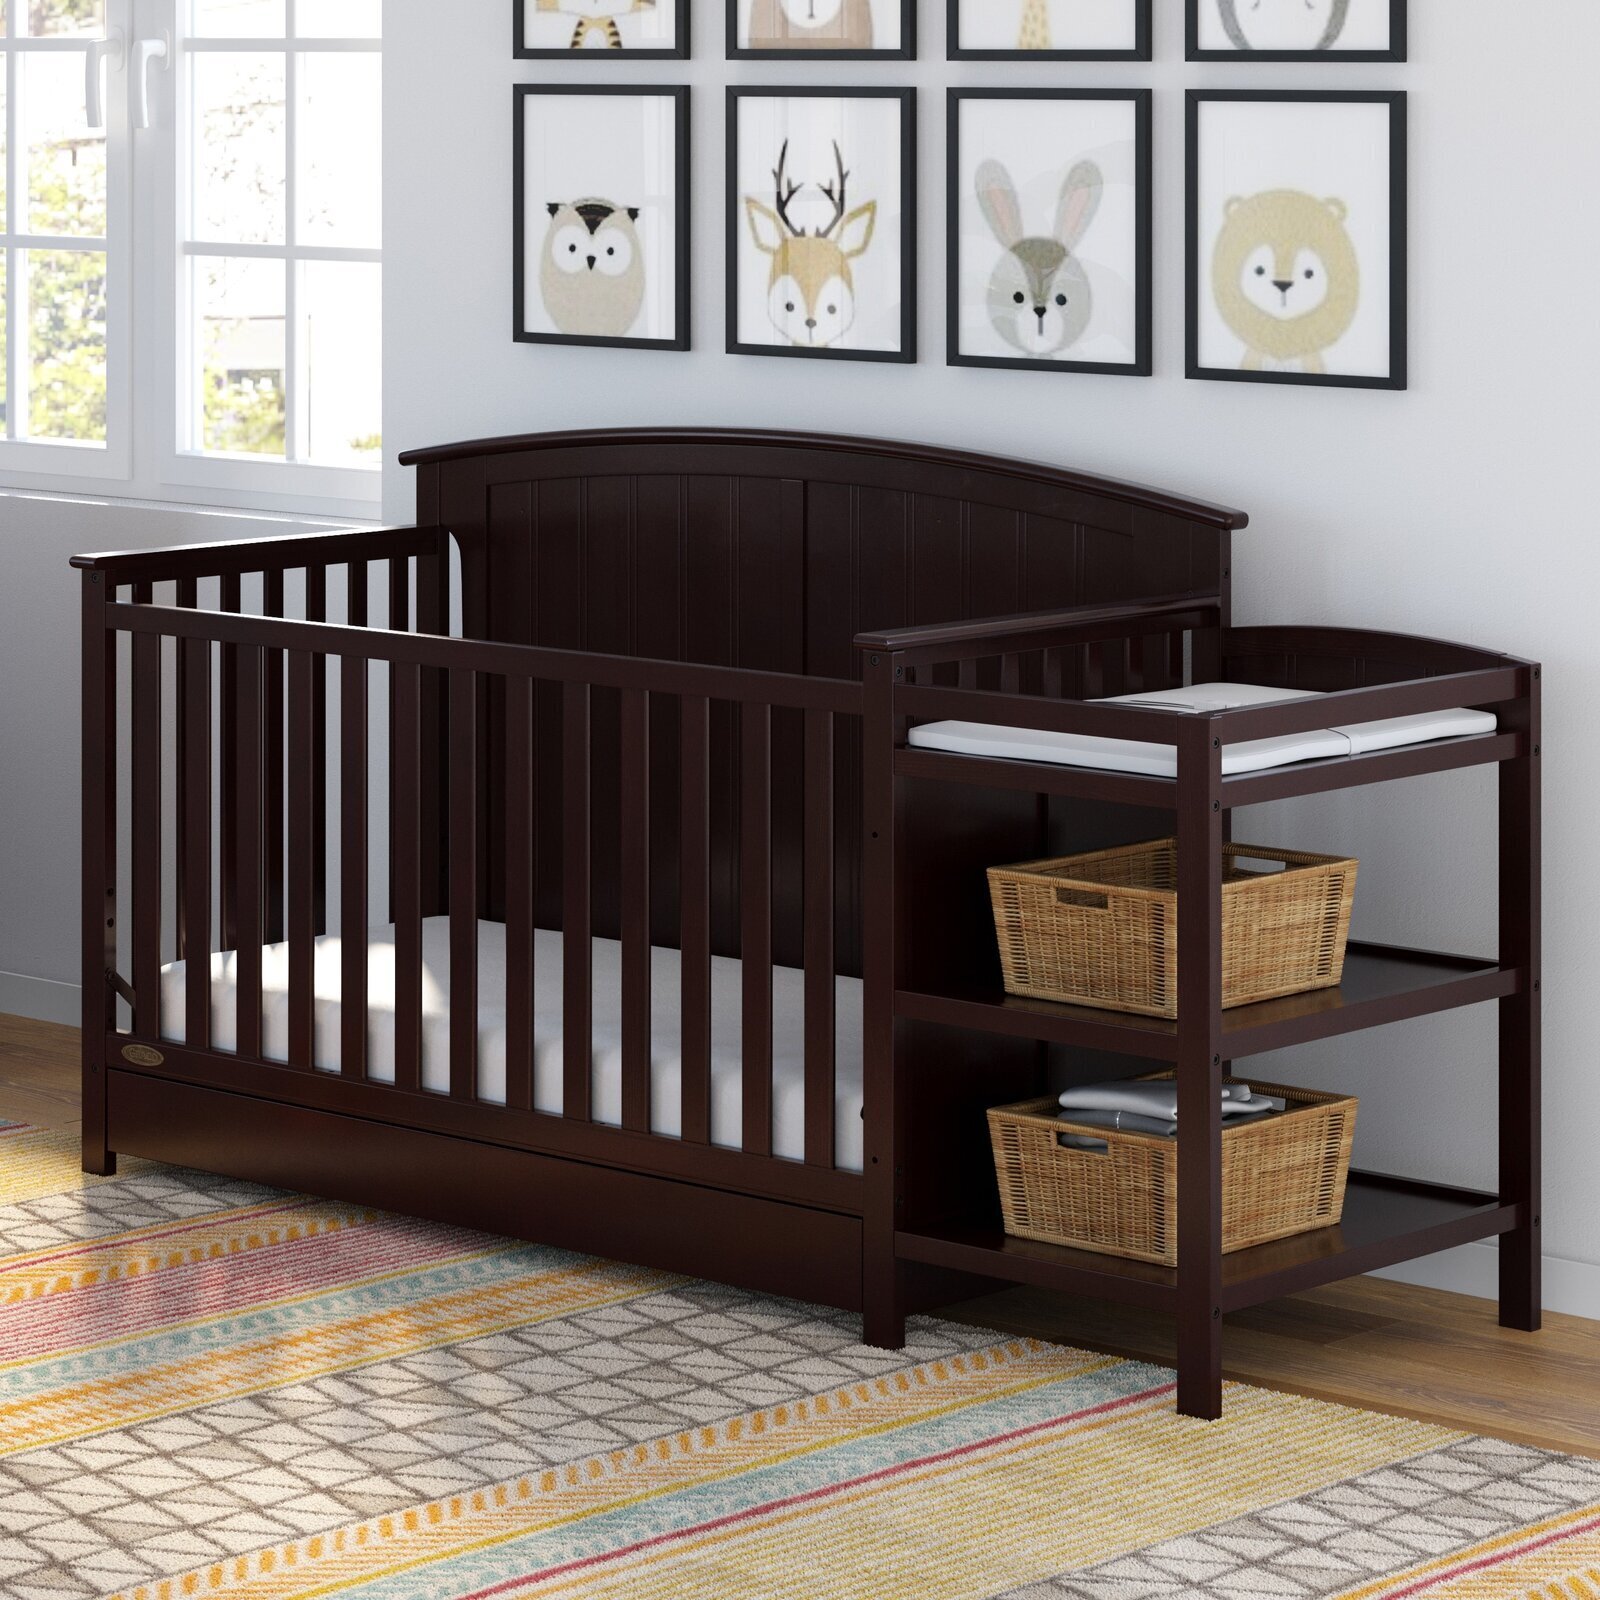 Traditional Crib for Boys